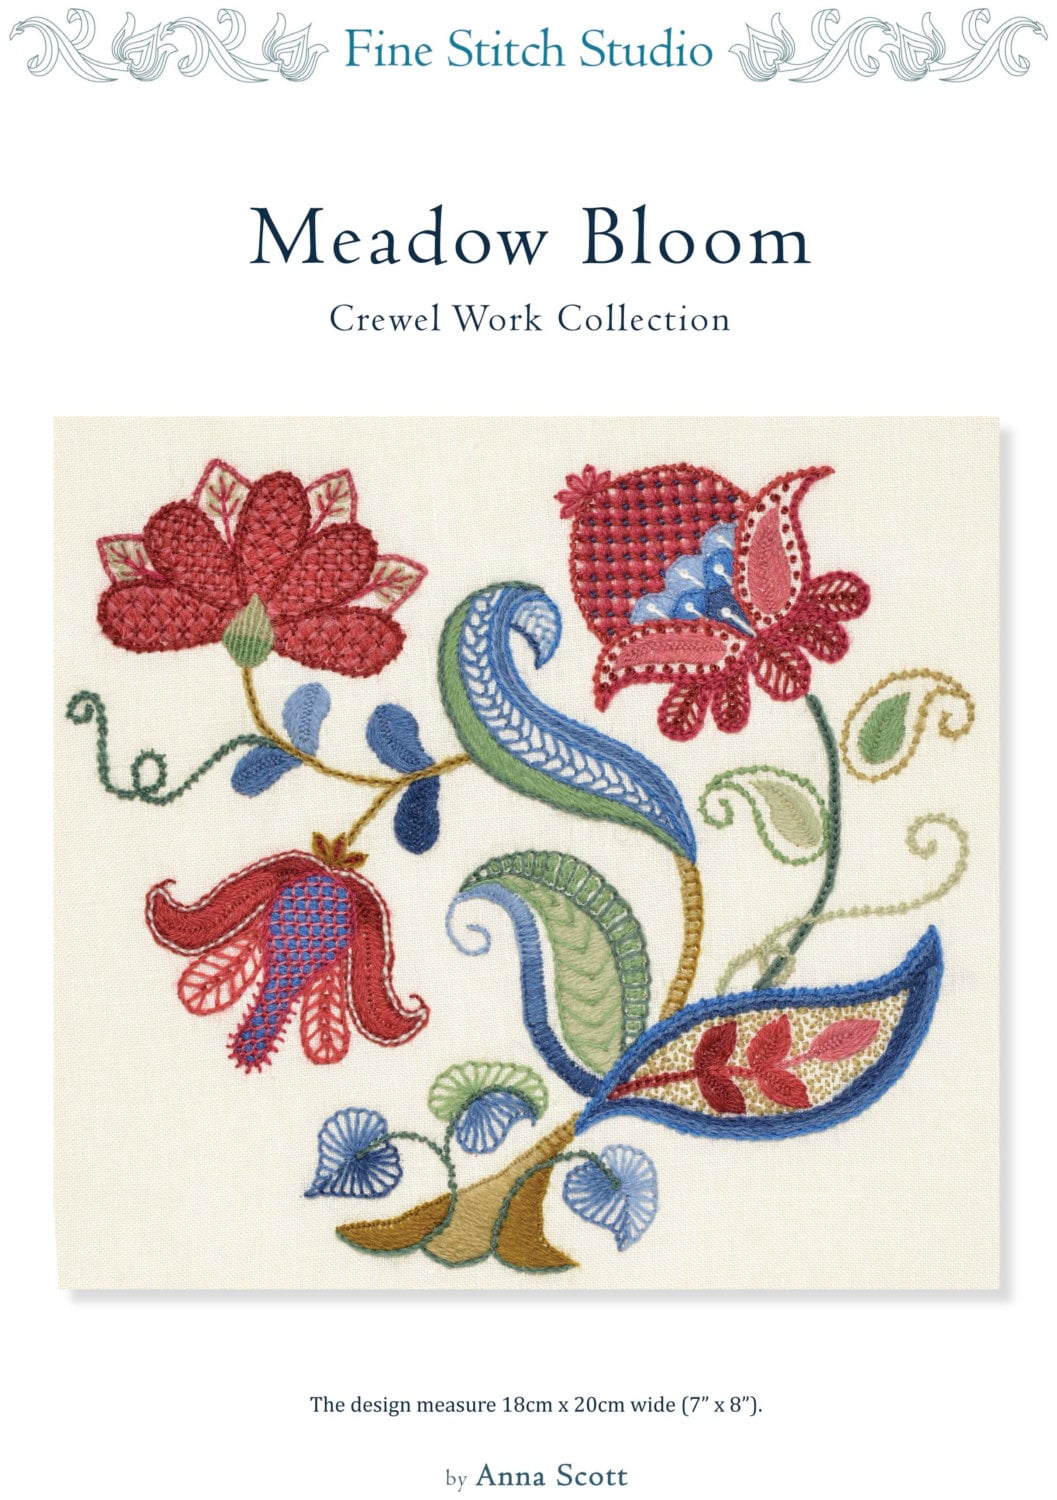 The Crewel Work Company ~ Jacobean Medley Crewel Embroidery Kit